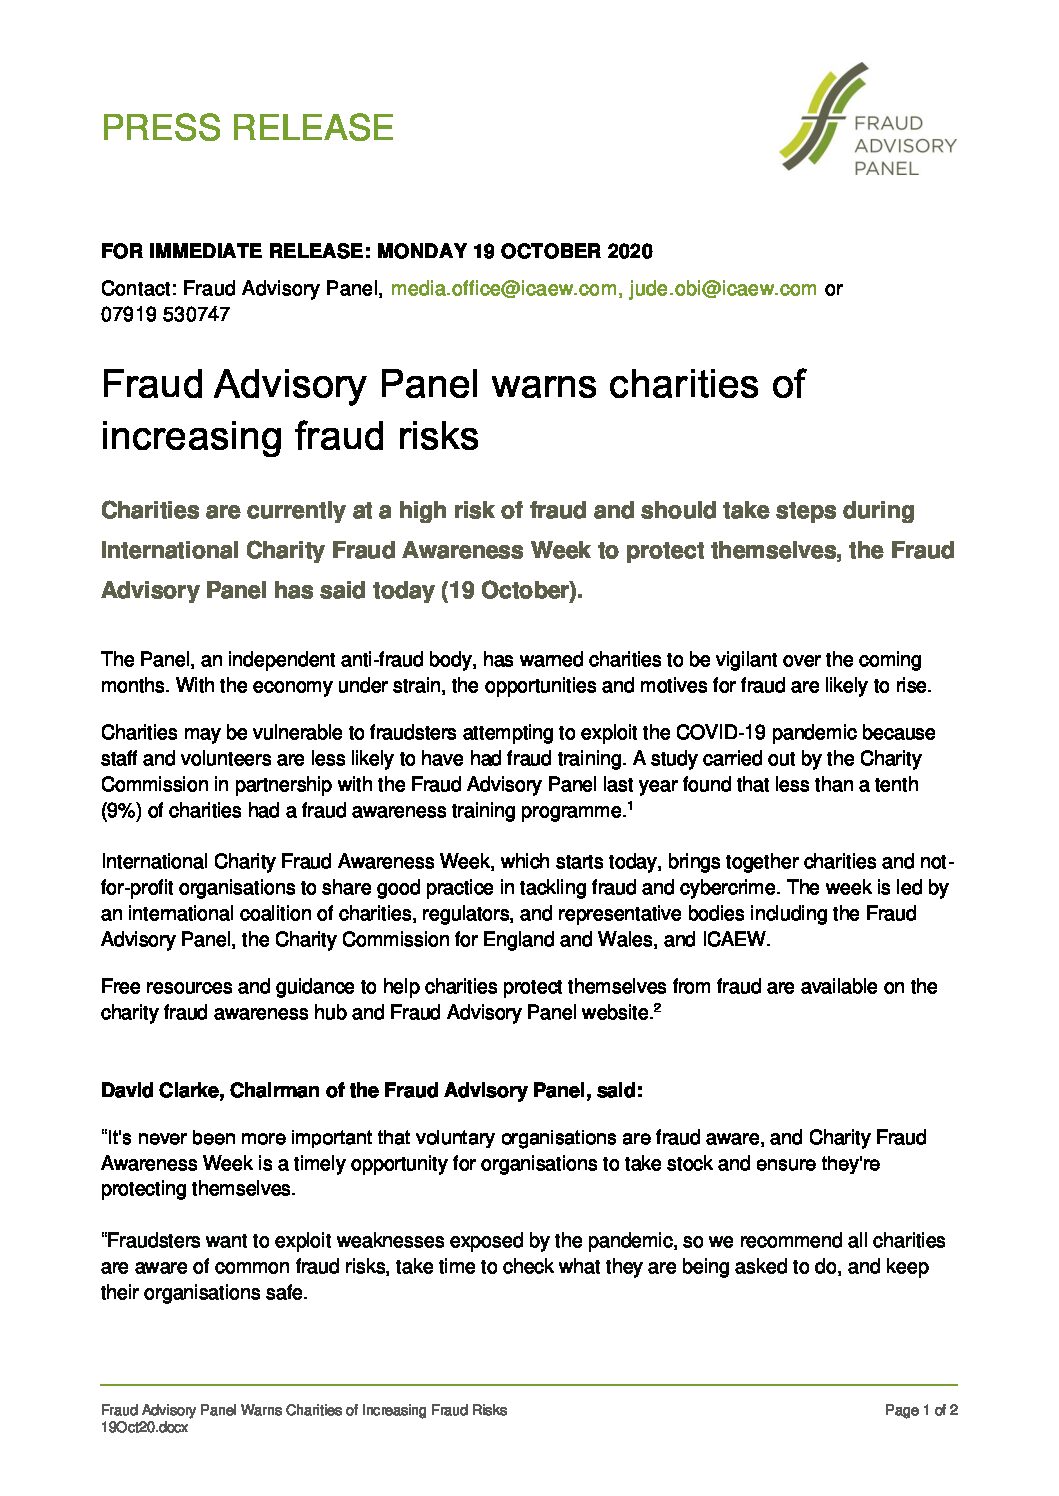 Fraud-Advisory-Panel-Warns-Charities-of-Increasing-Fraud-Risks-19Oct20 document cover